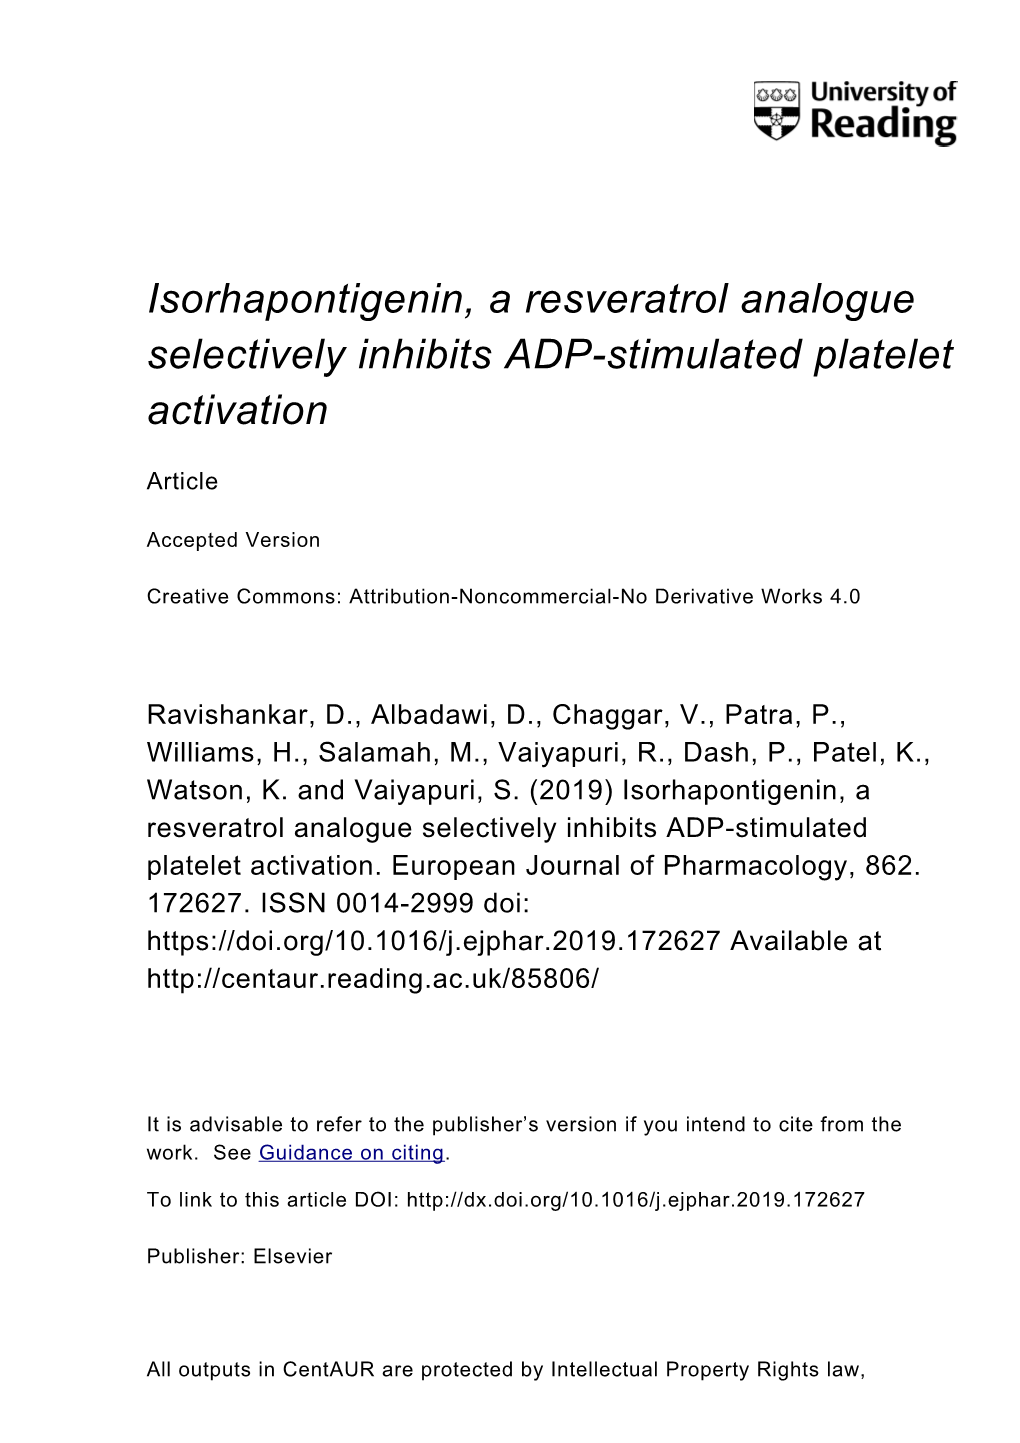 Isorhapontigenin, a Resveratrol Analogue Selectively Inhibits ADP-Stimulated Platelet Activation